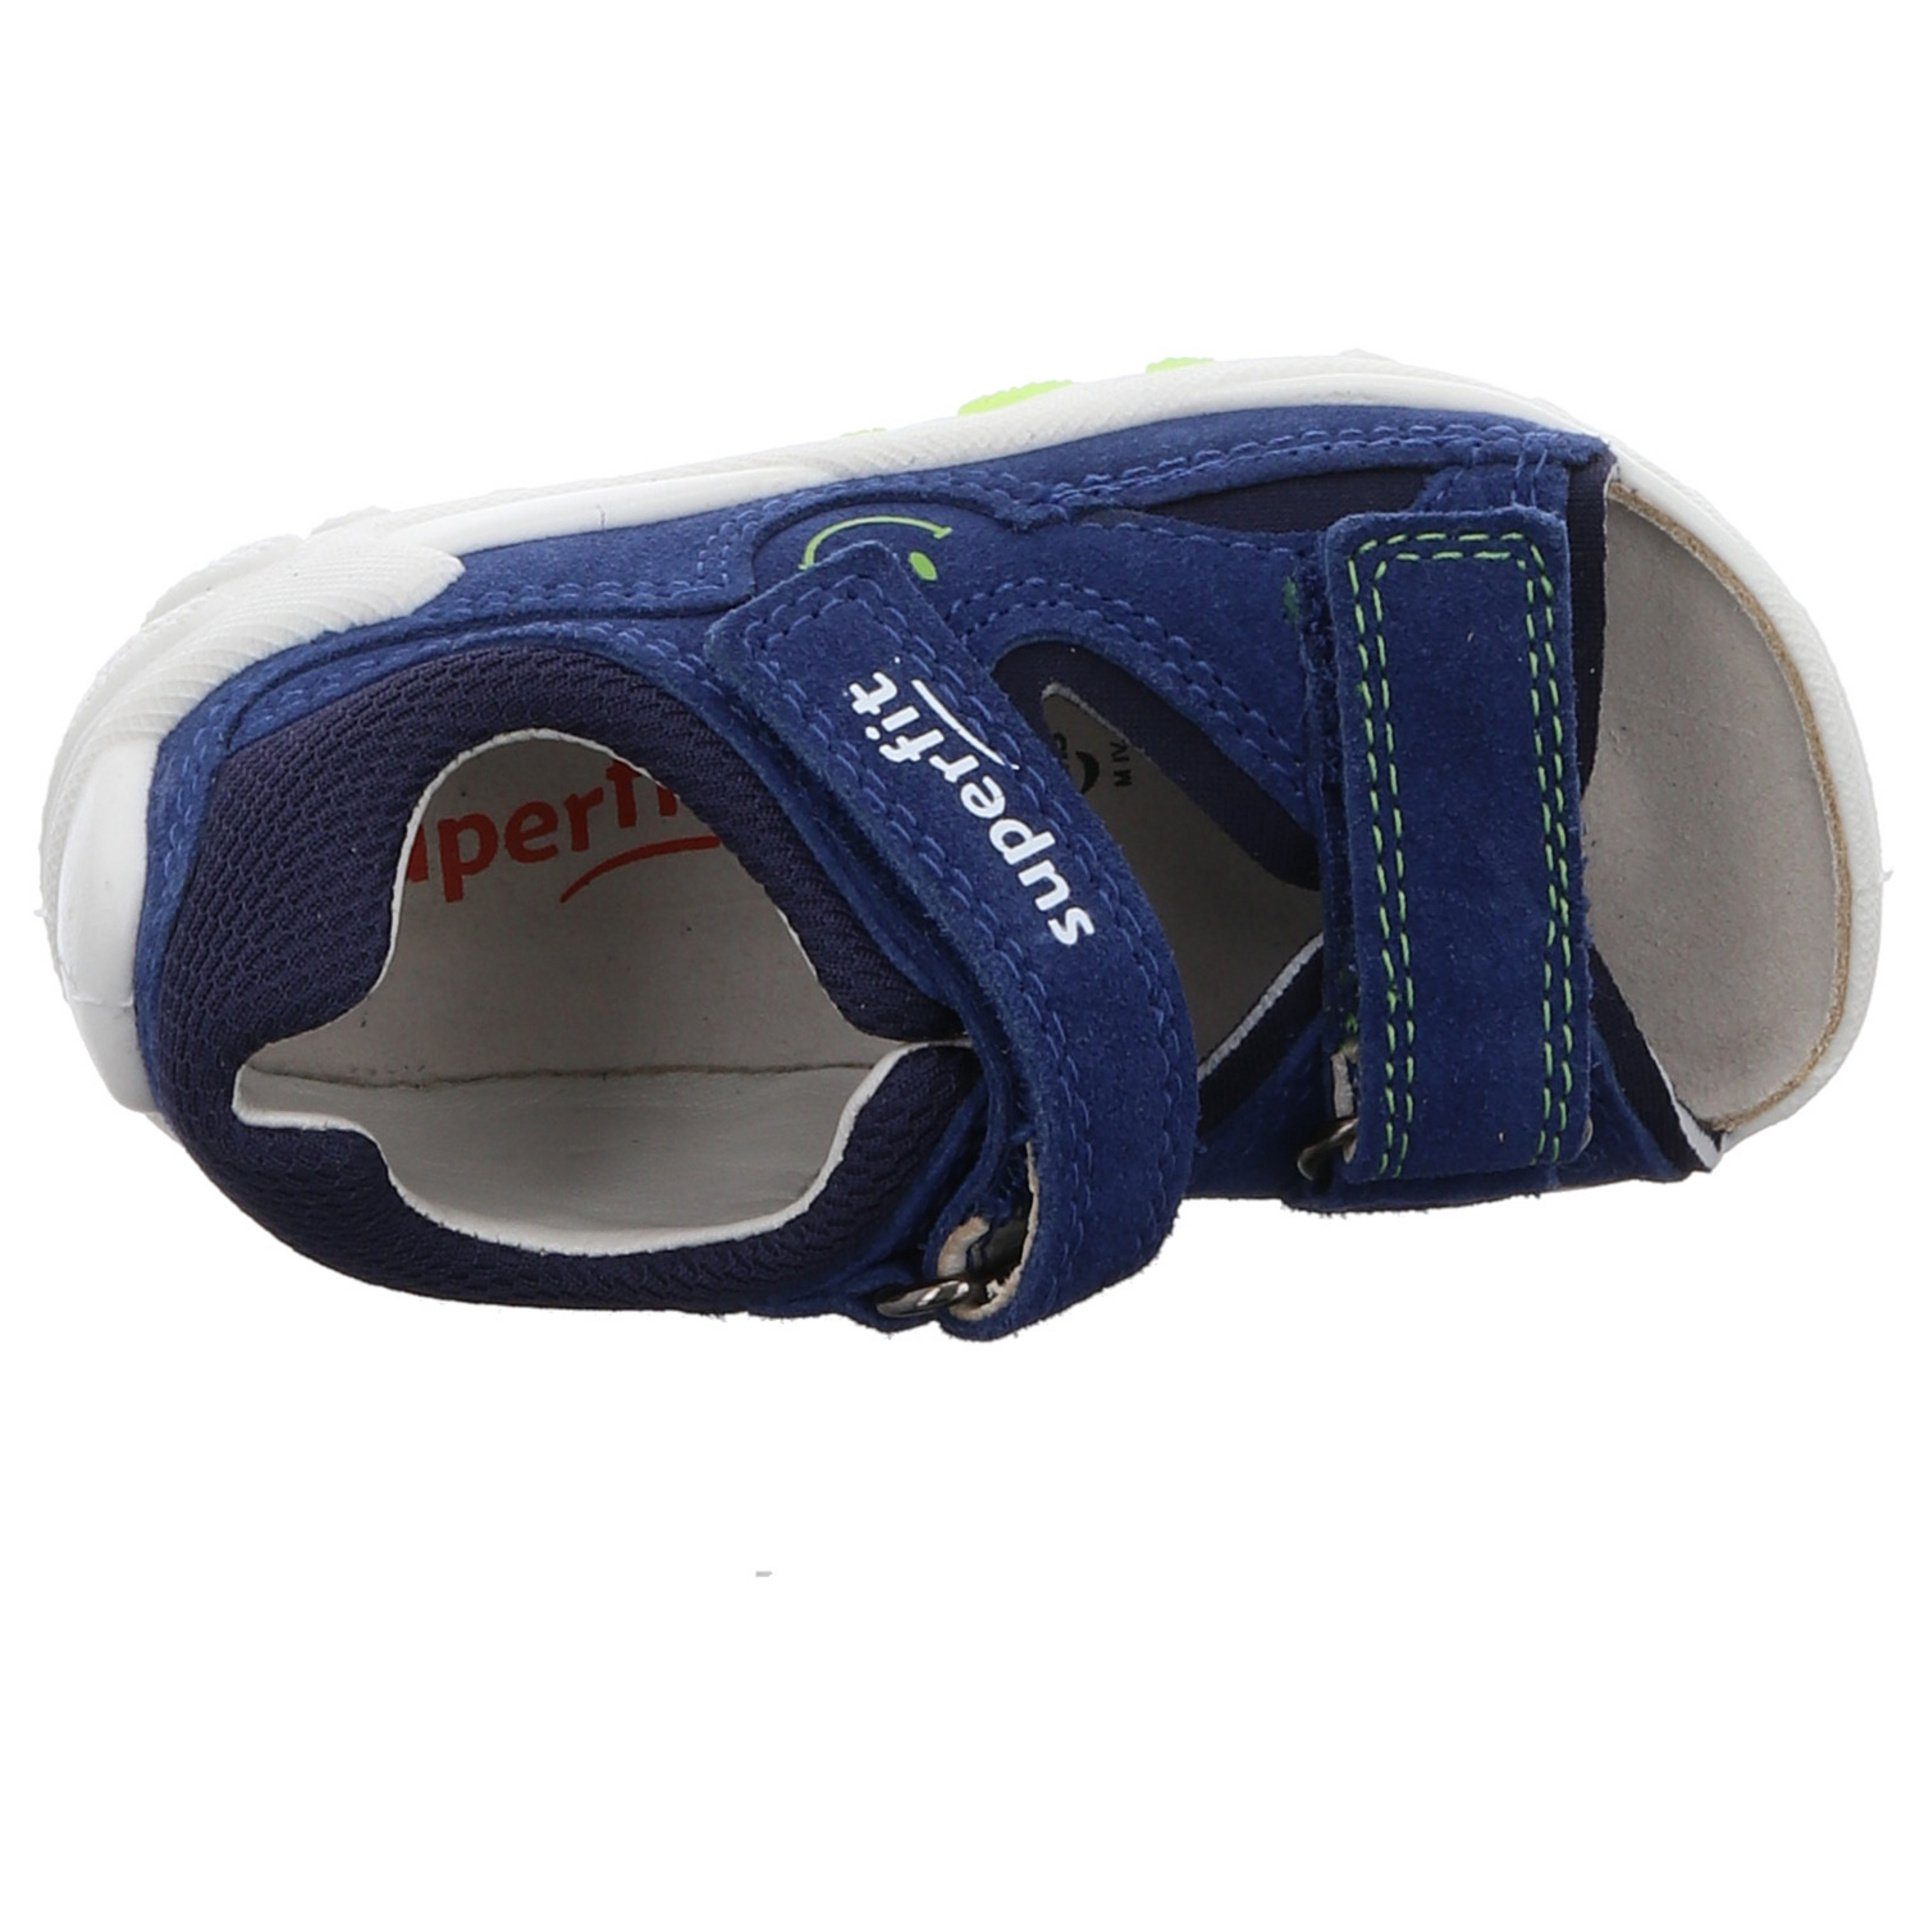 Schuhe Sandale Sandalen Flow Superfit Sandale Leder-/Textilkombination Kinderschuhe BLAU/HELLGRÜN Jungen